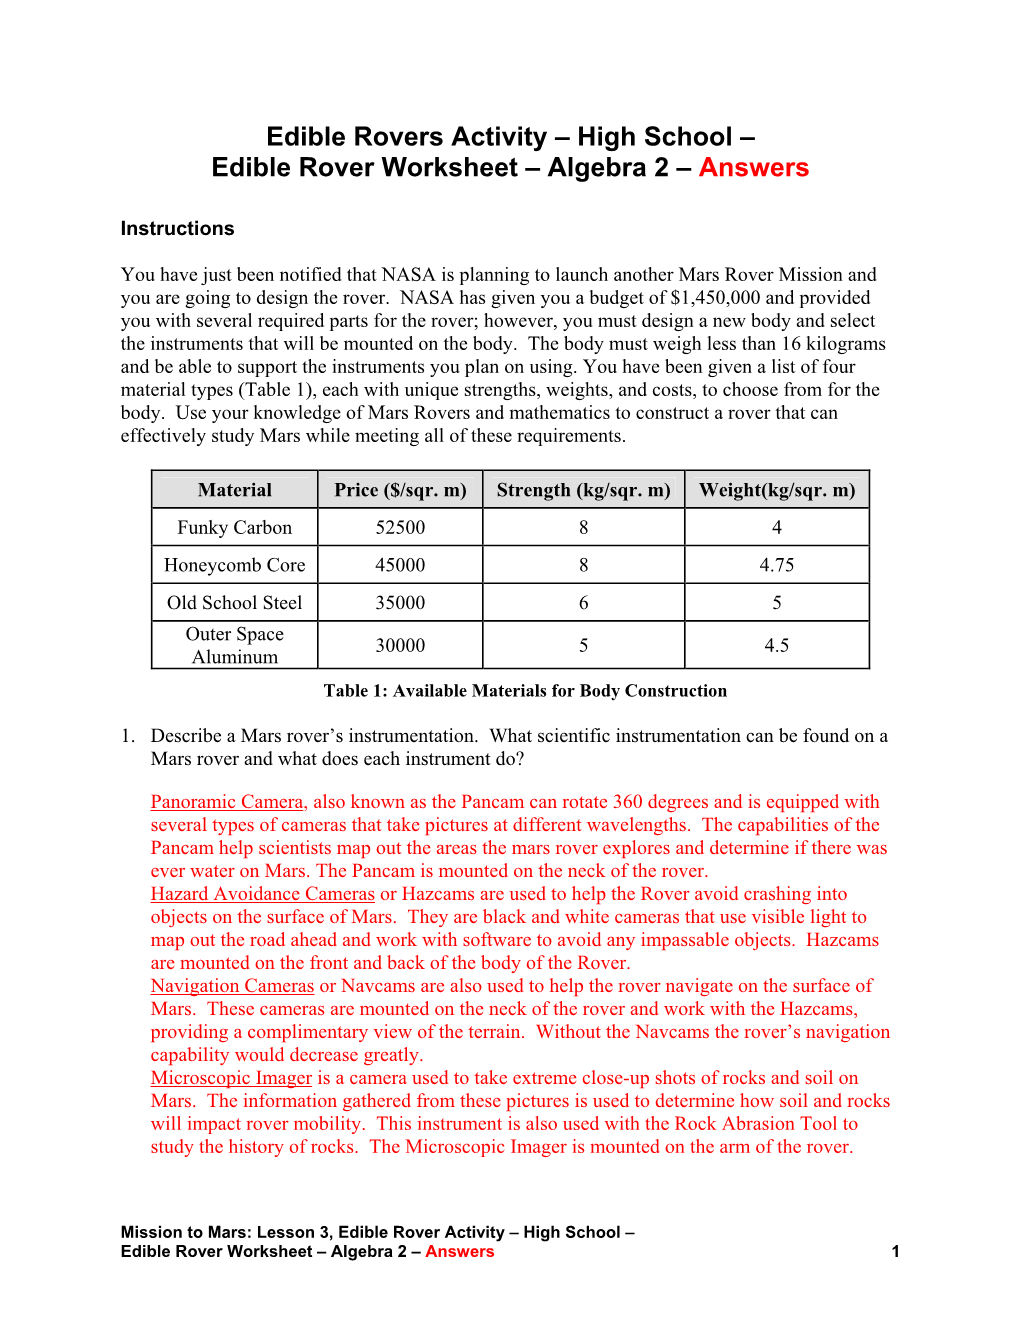 Edible Rover Worksheet – Algebra 2 – Answers